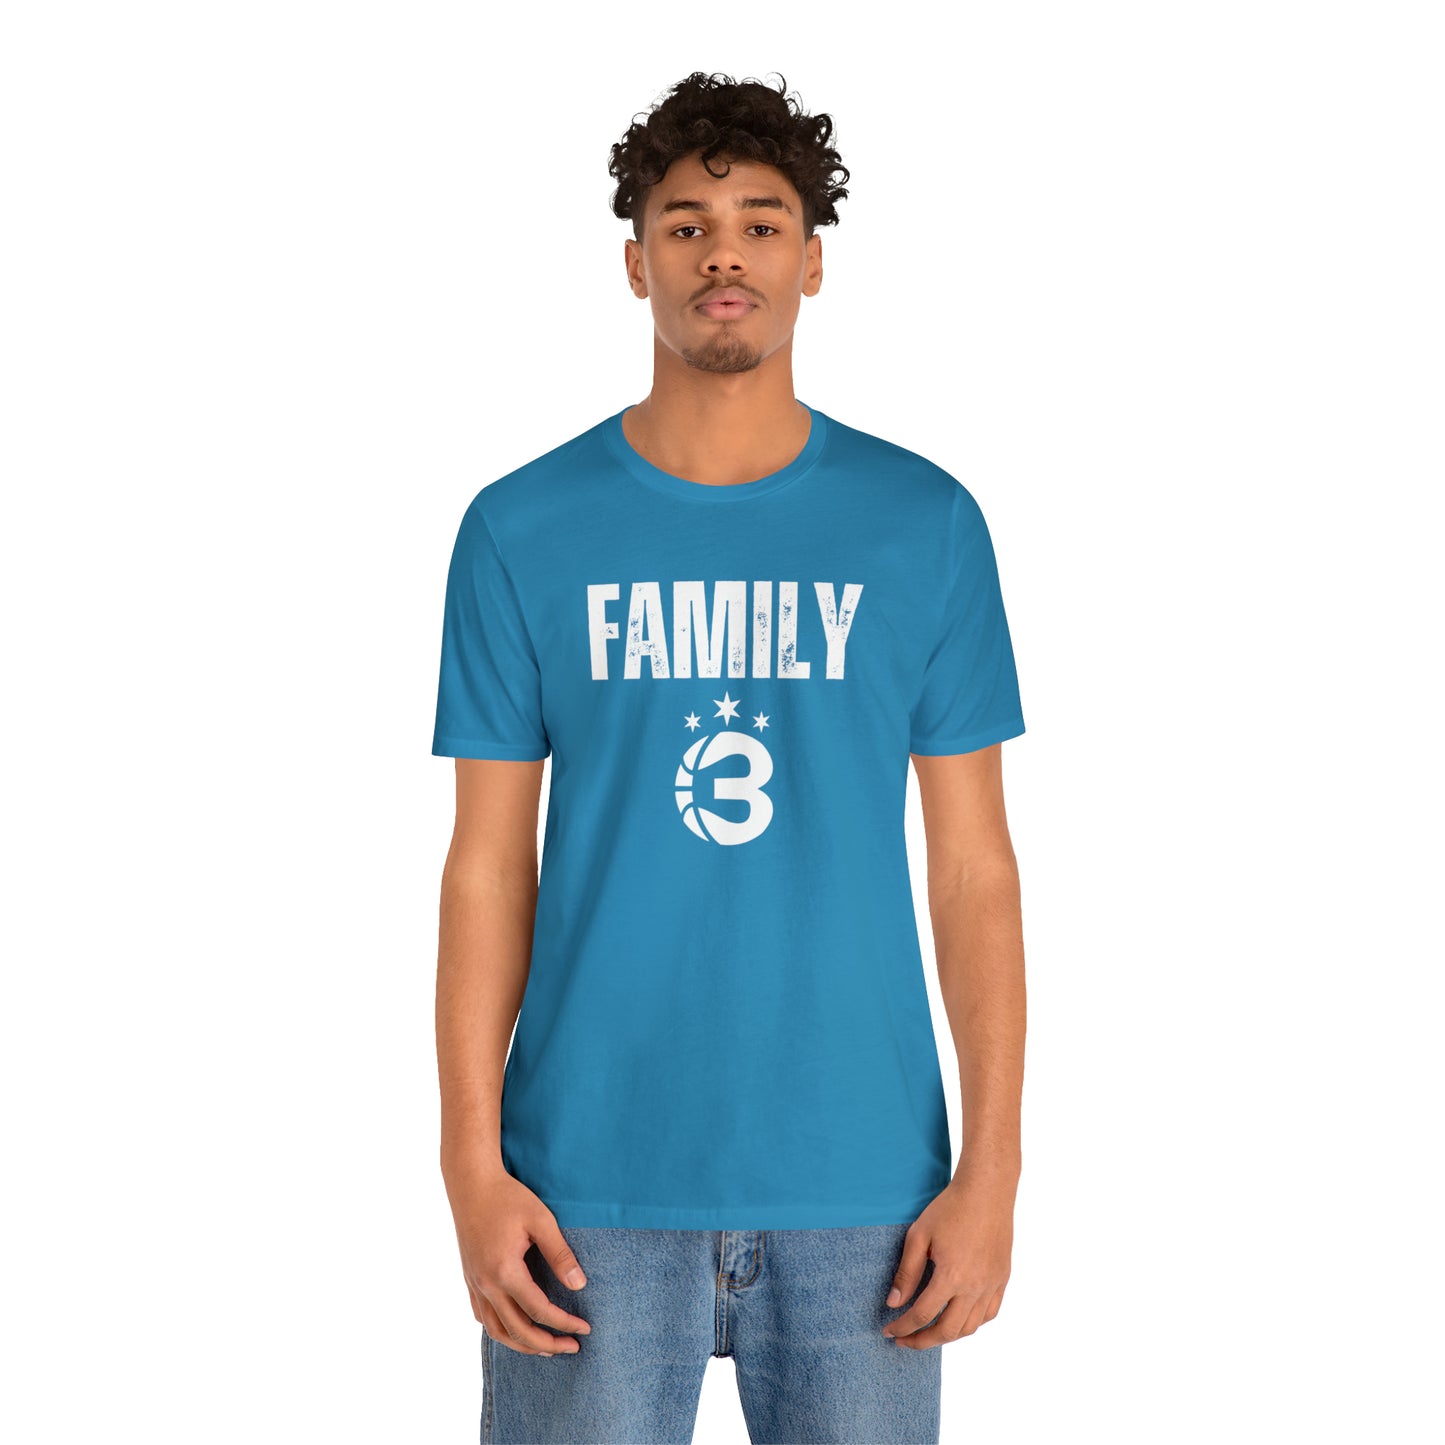 "Family" Tee